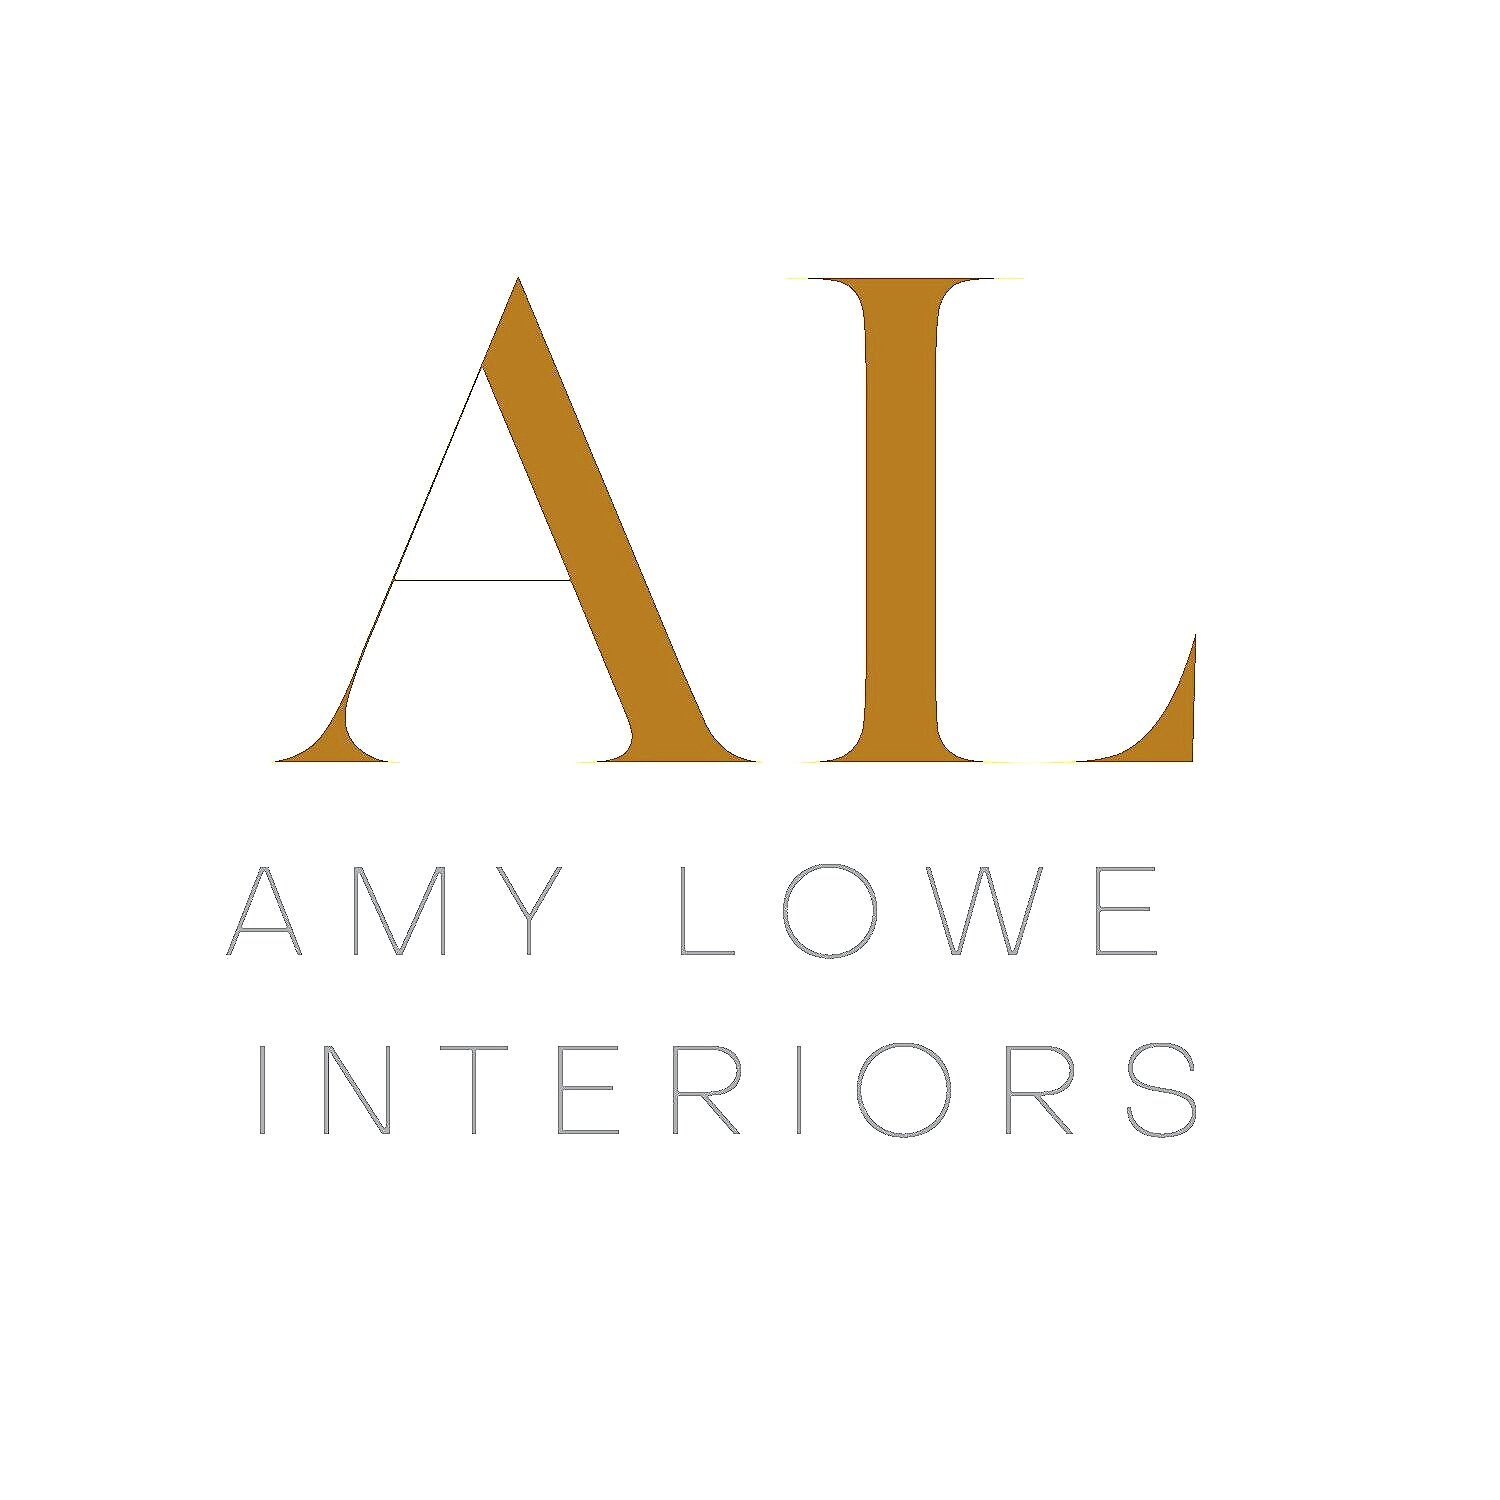 Amy Lowe Interiors